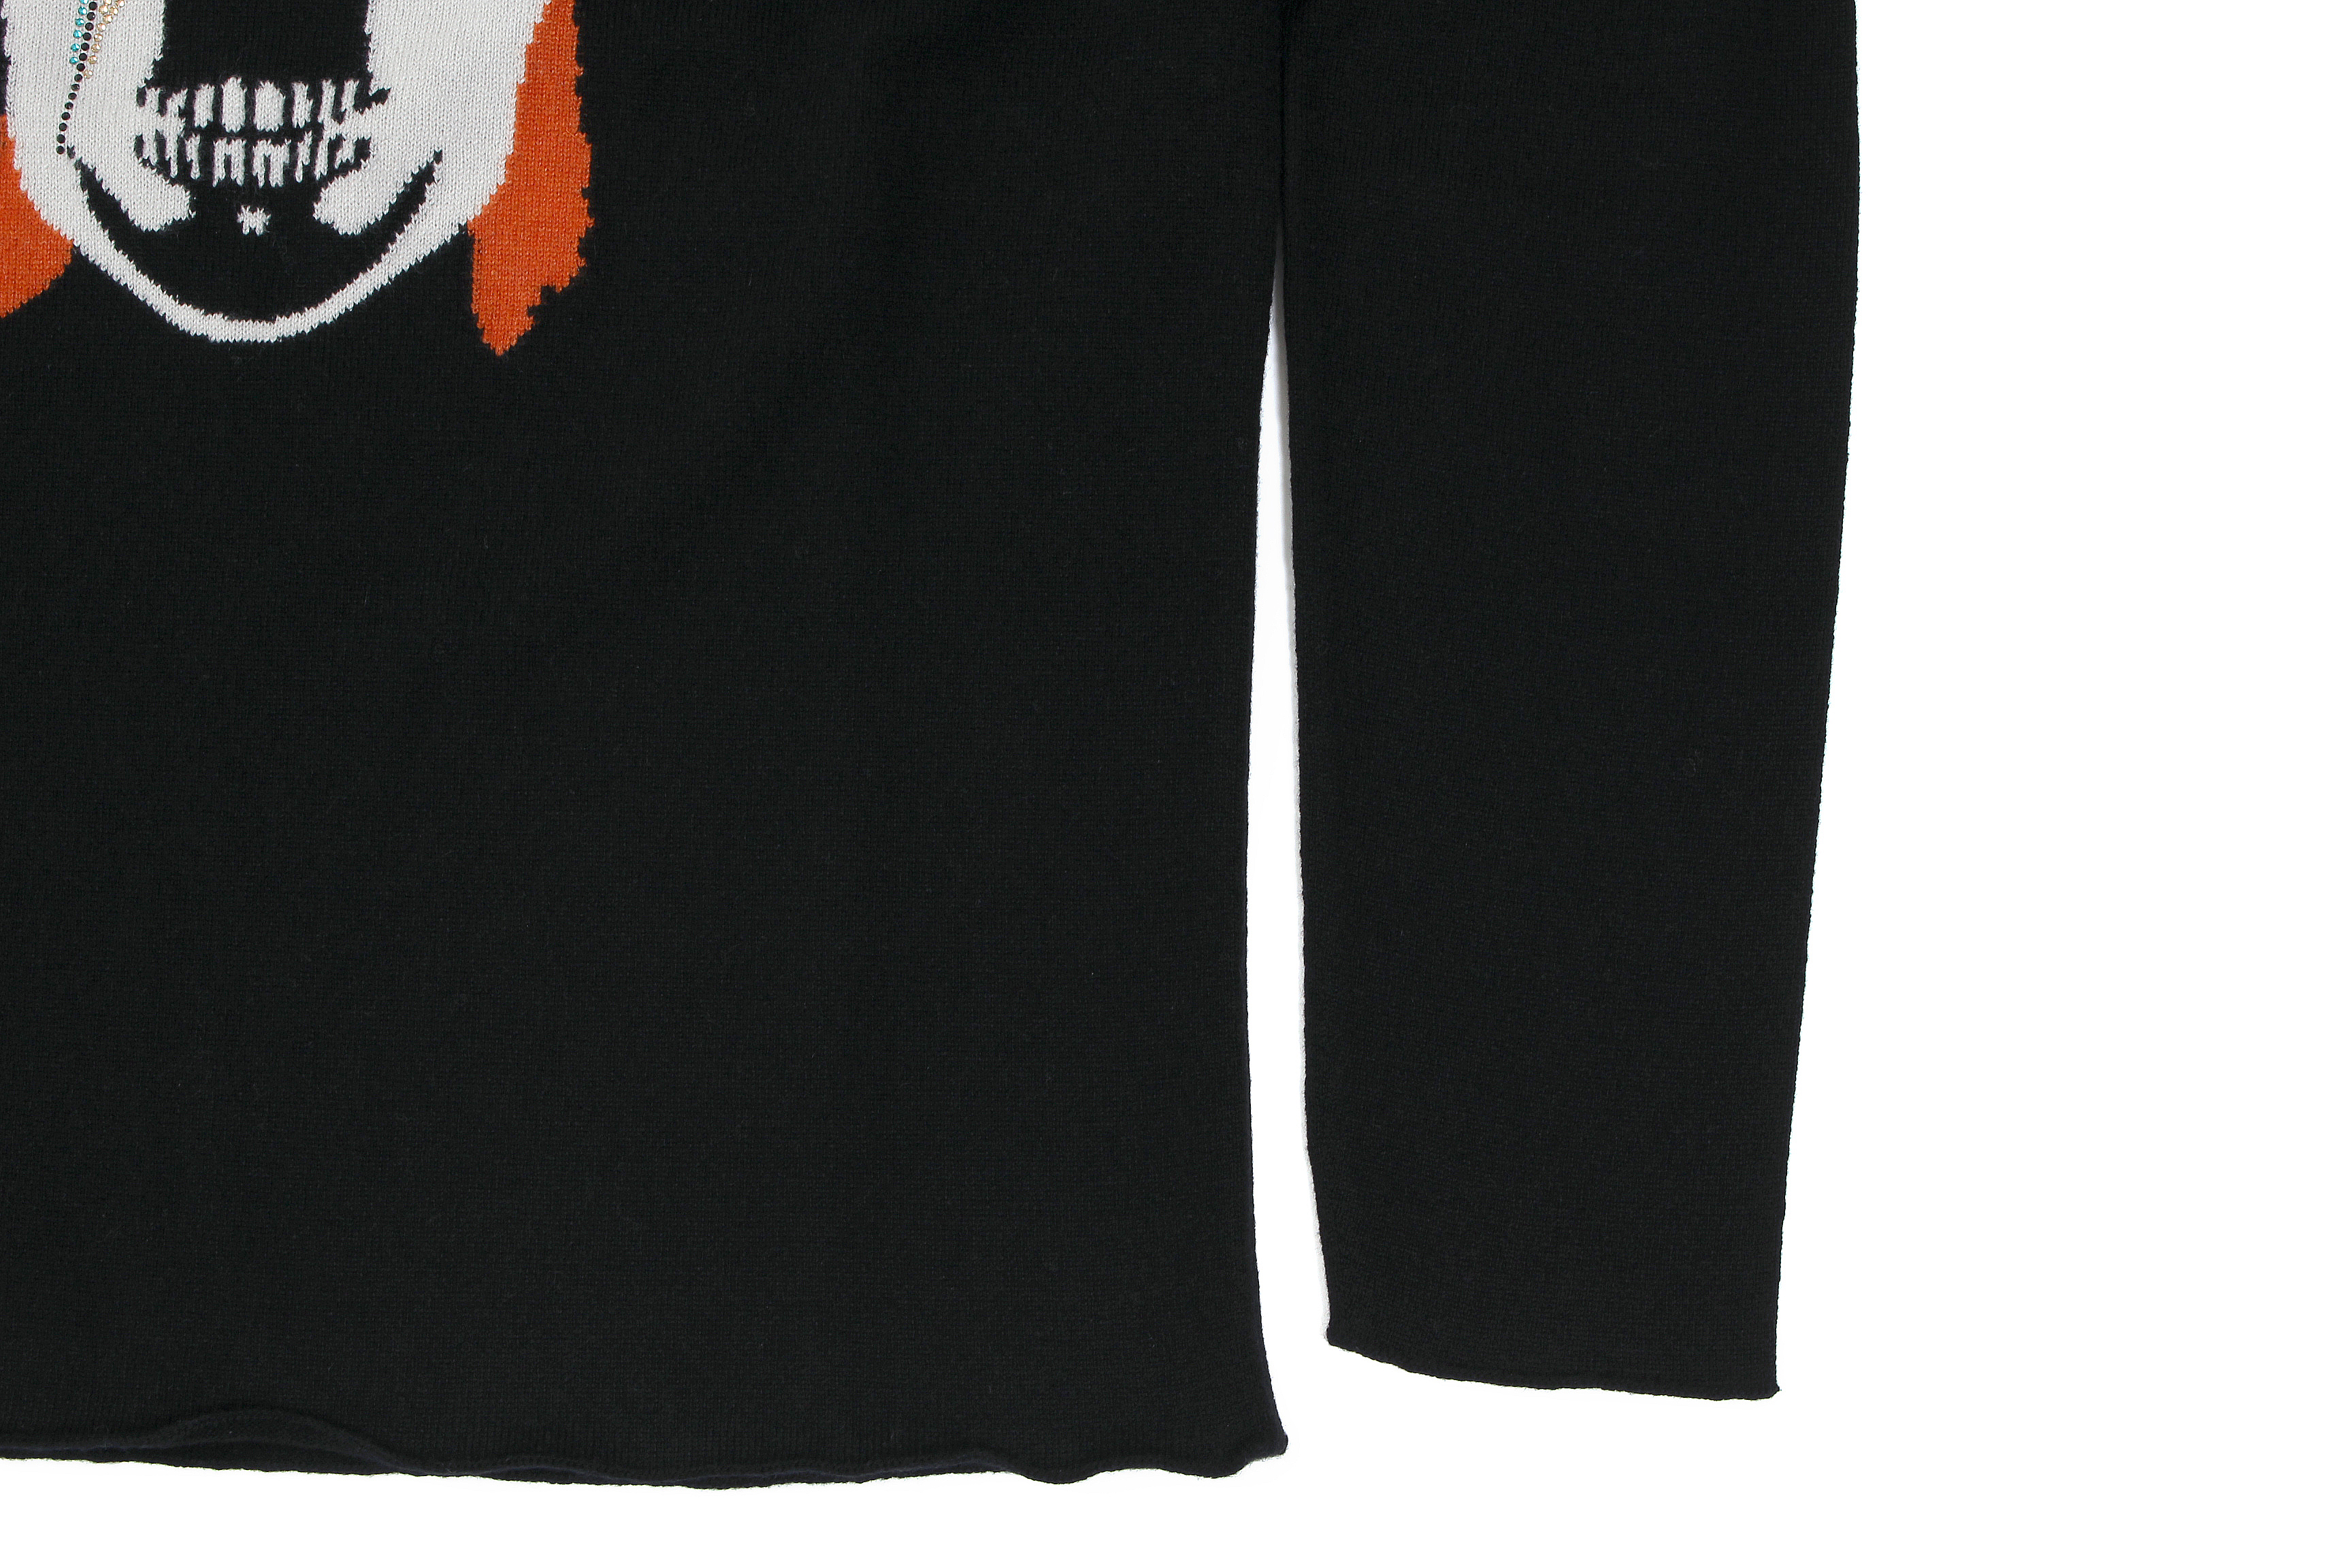 lucien pellat-finet(ルシアン ペラフィネ) David Bowie Skull Cashmere Sweater (デヴィッド ボウイ スカル カシミア セーター) インターシャ カシミア スカル セーター BLACK × NIVEOUS (ブラック × ホワイト) 愛知 名古屋 altoediritto アルトエデリット